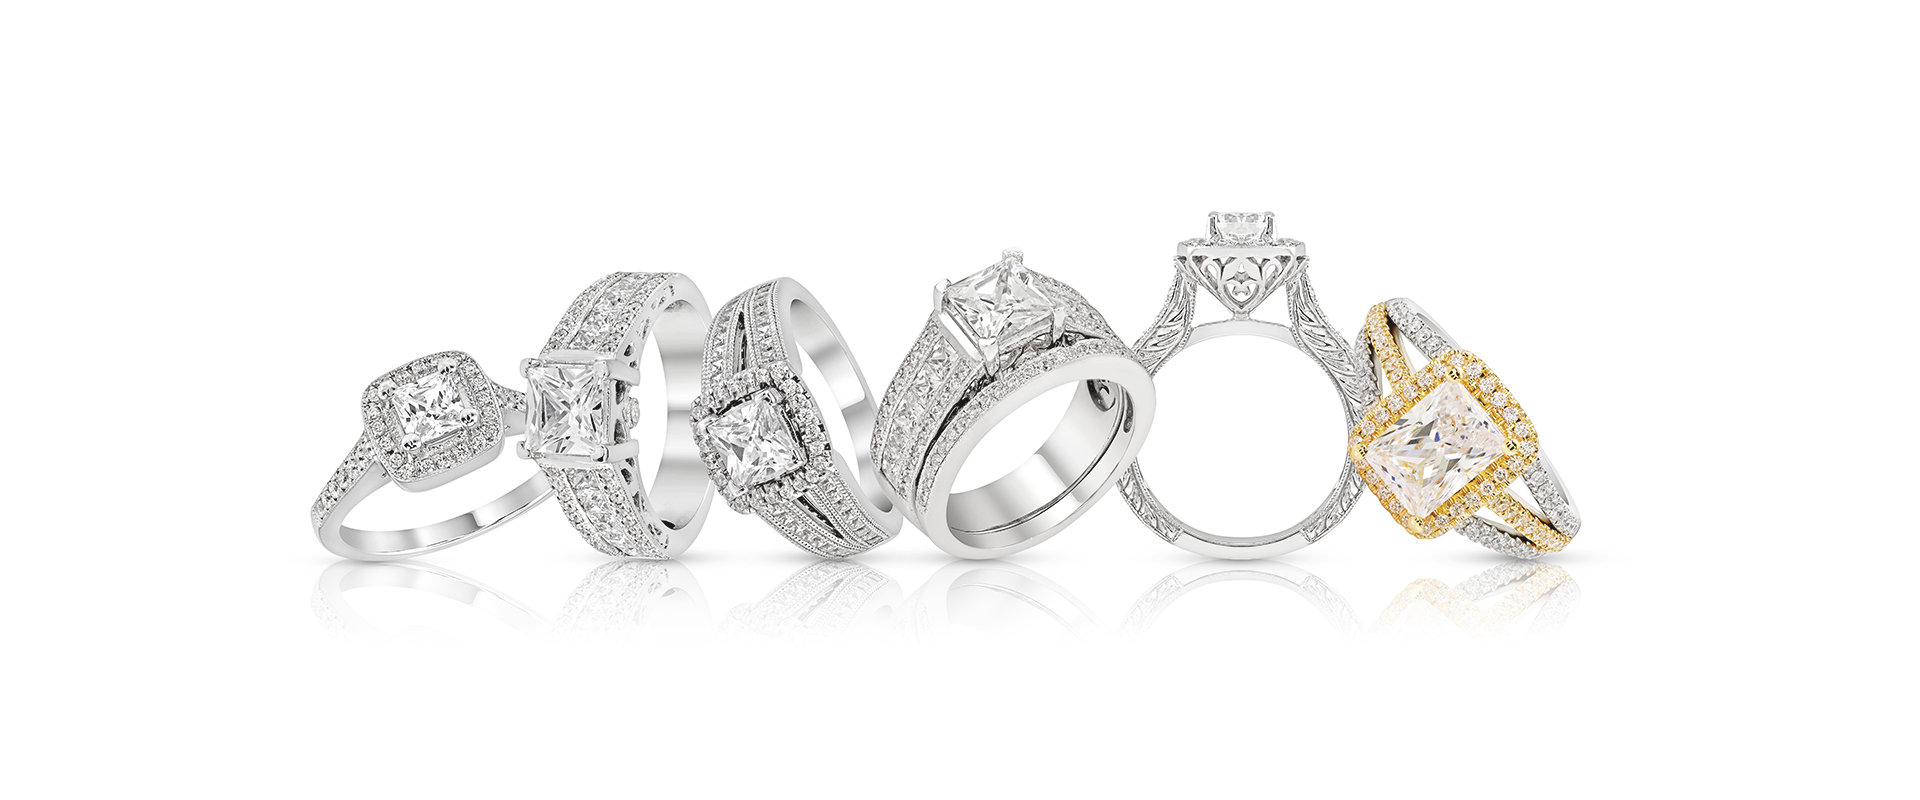 Carat Girl - The Diamond Rings Online Store